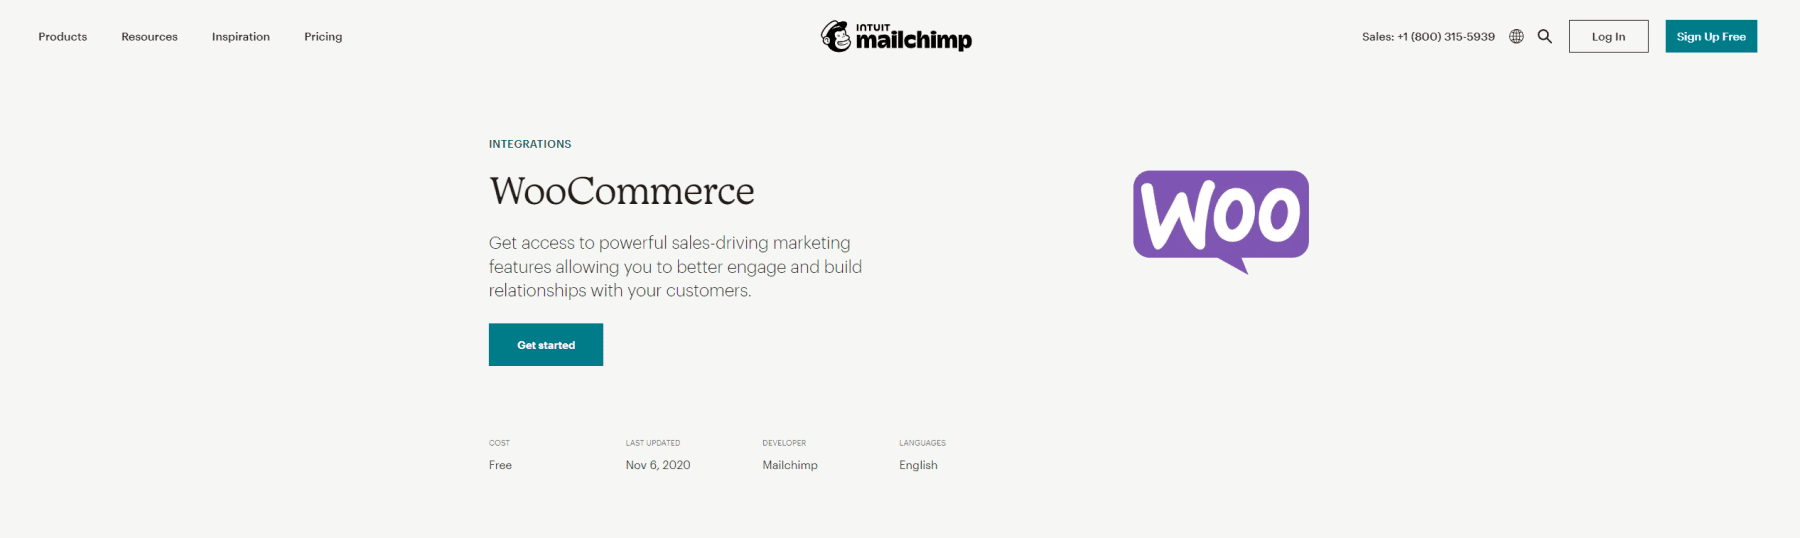 Mailchimp WooCommerce Marketing Plugin